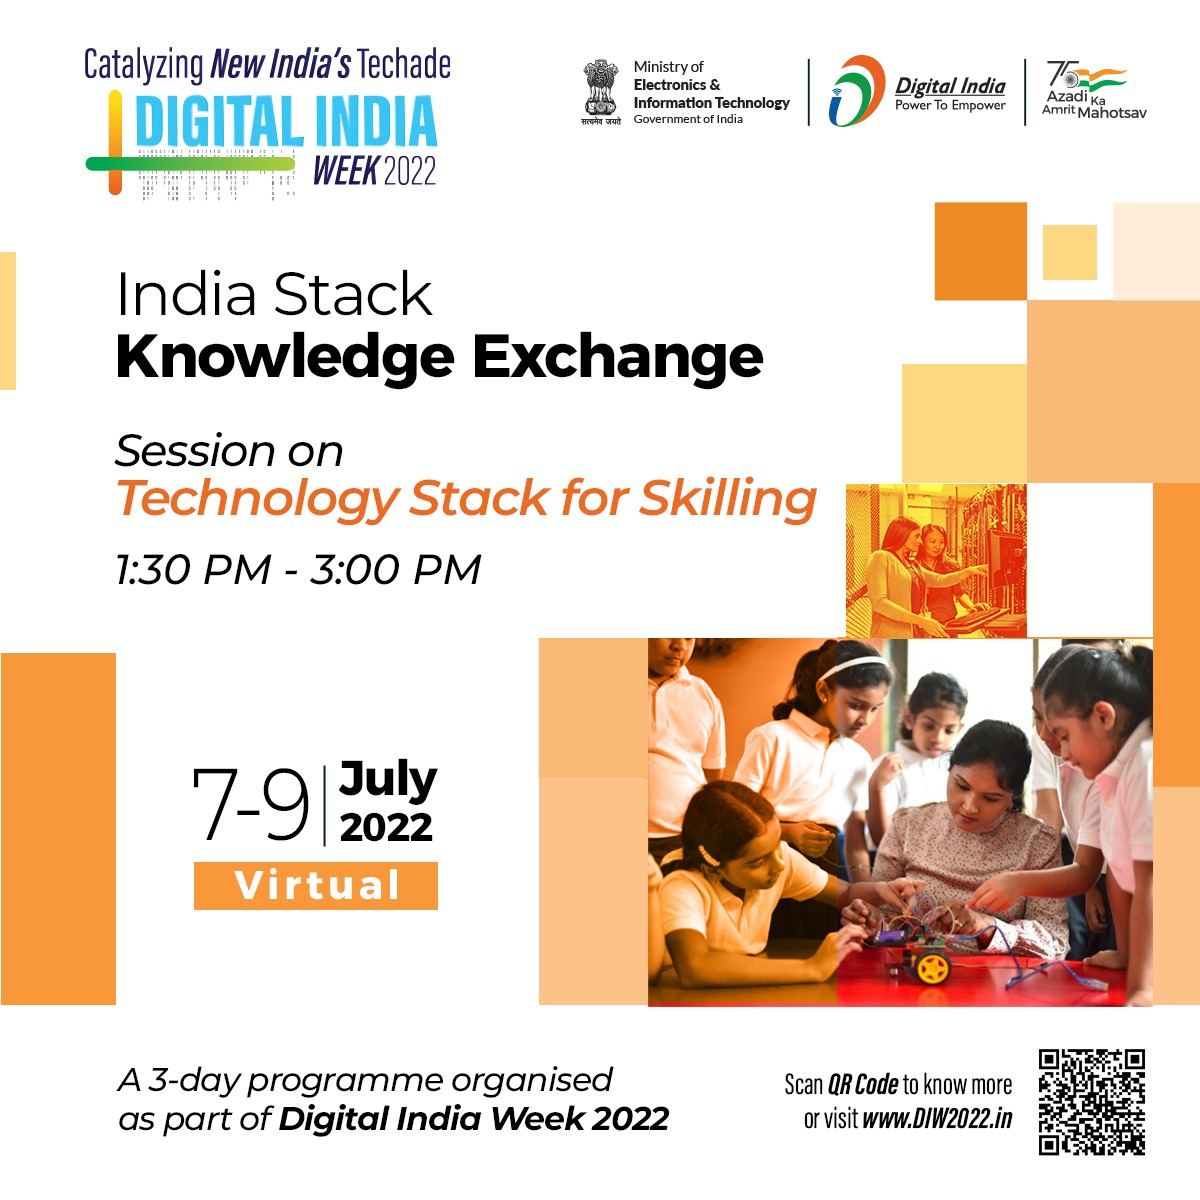 #TechnologyStack for #Skilling @ #IndiaStack Knowledge Exchange

Know about #DigitalIndia initiatives like @AIMtoInnovate, @fsprimeofficial, Digital Literacy, iGoT & more. #DIW2022 

▶️ youtu.be/J2UCIHDcjxc
⏲️ 1:30 PM - 3 PM

@nasscom @EduMinOfIndia @kirti_seth @NITIAayog